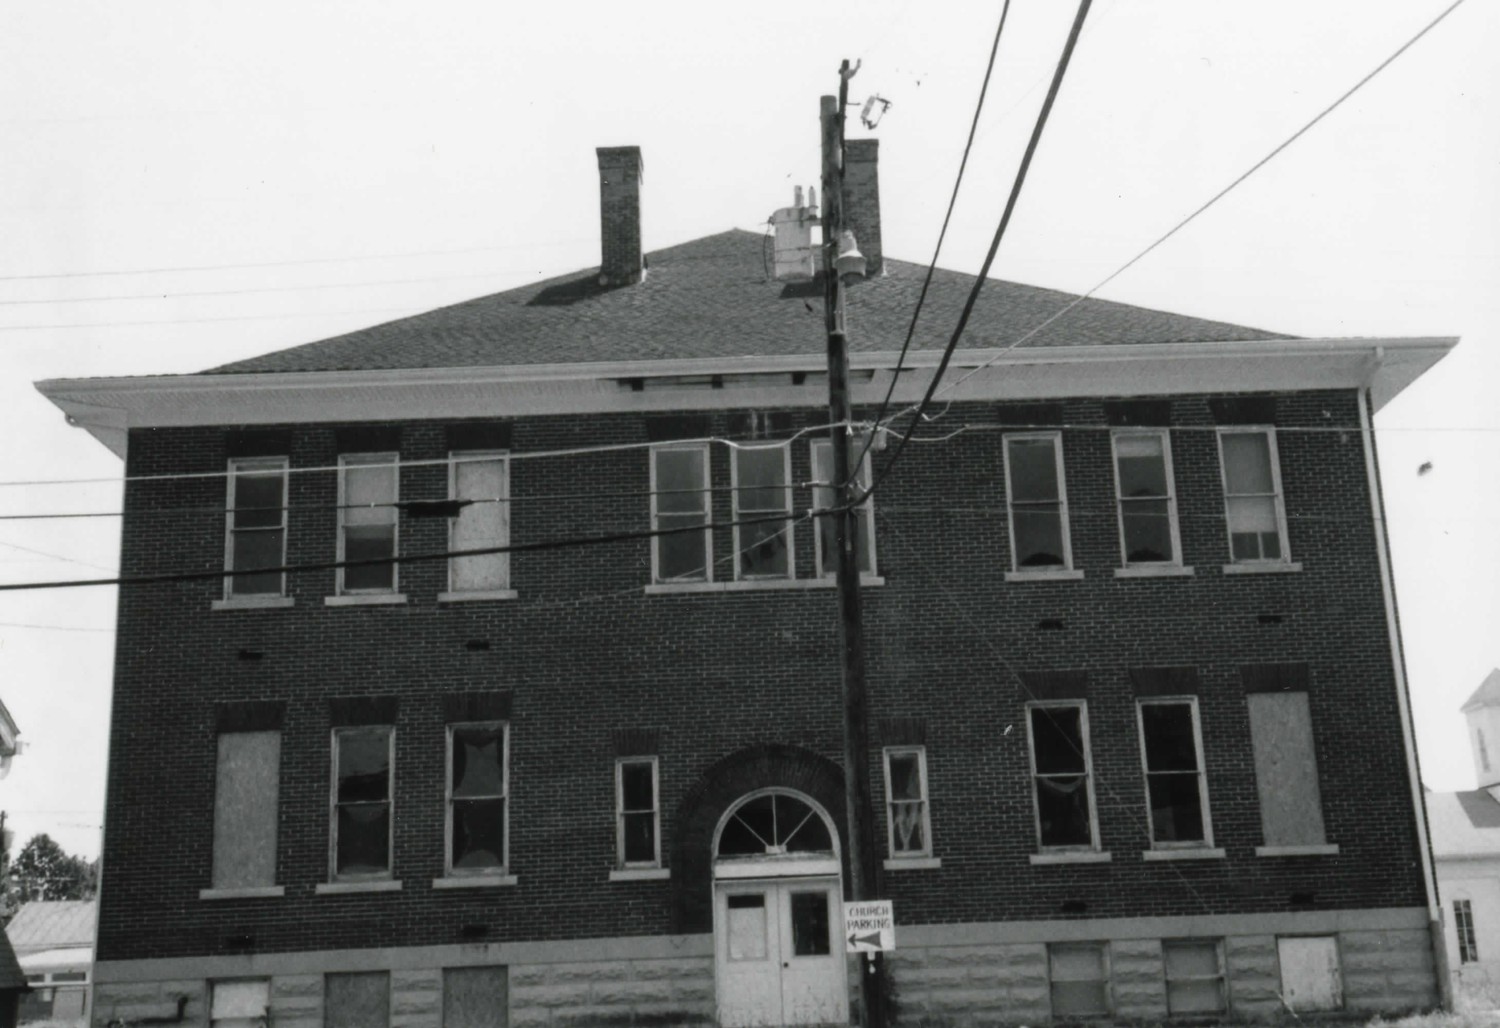 Camden Public School, Camden Ohio Central Avenue facing east (1997)